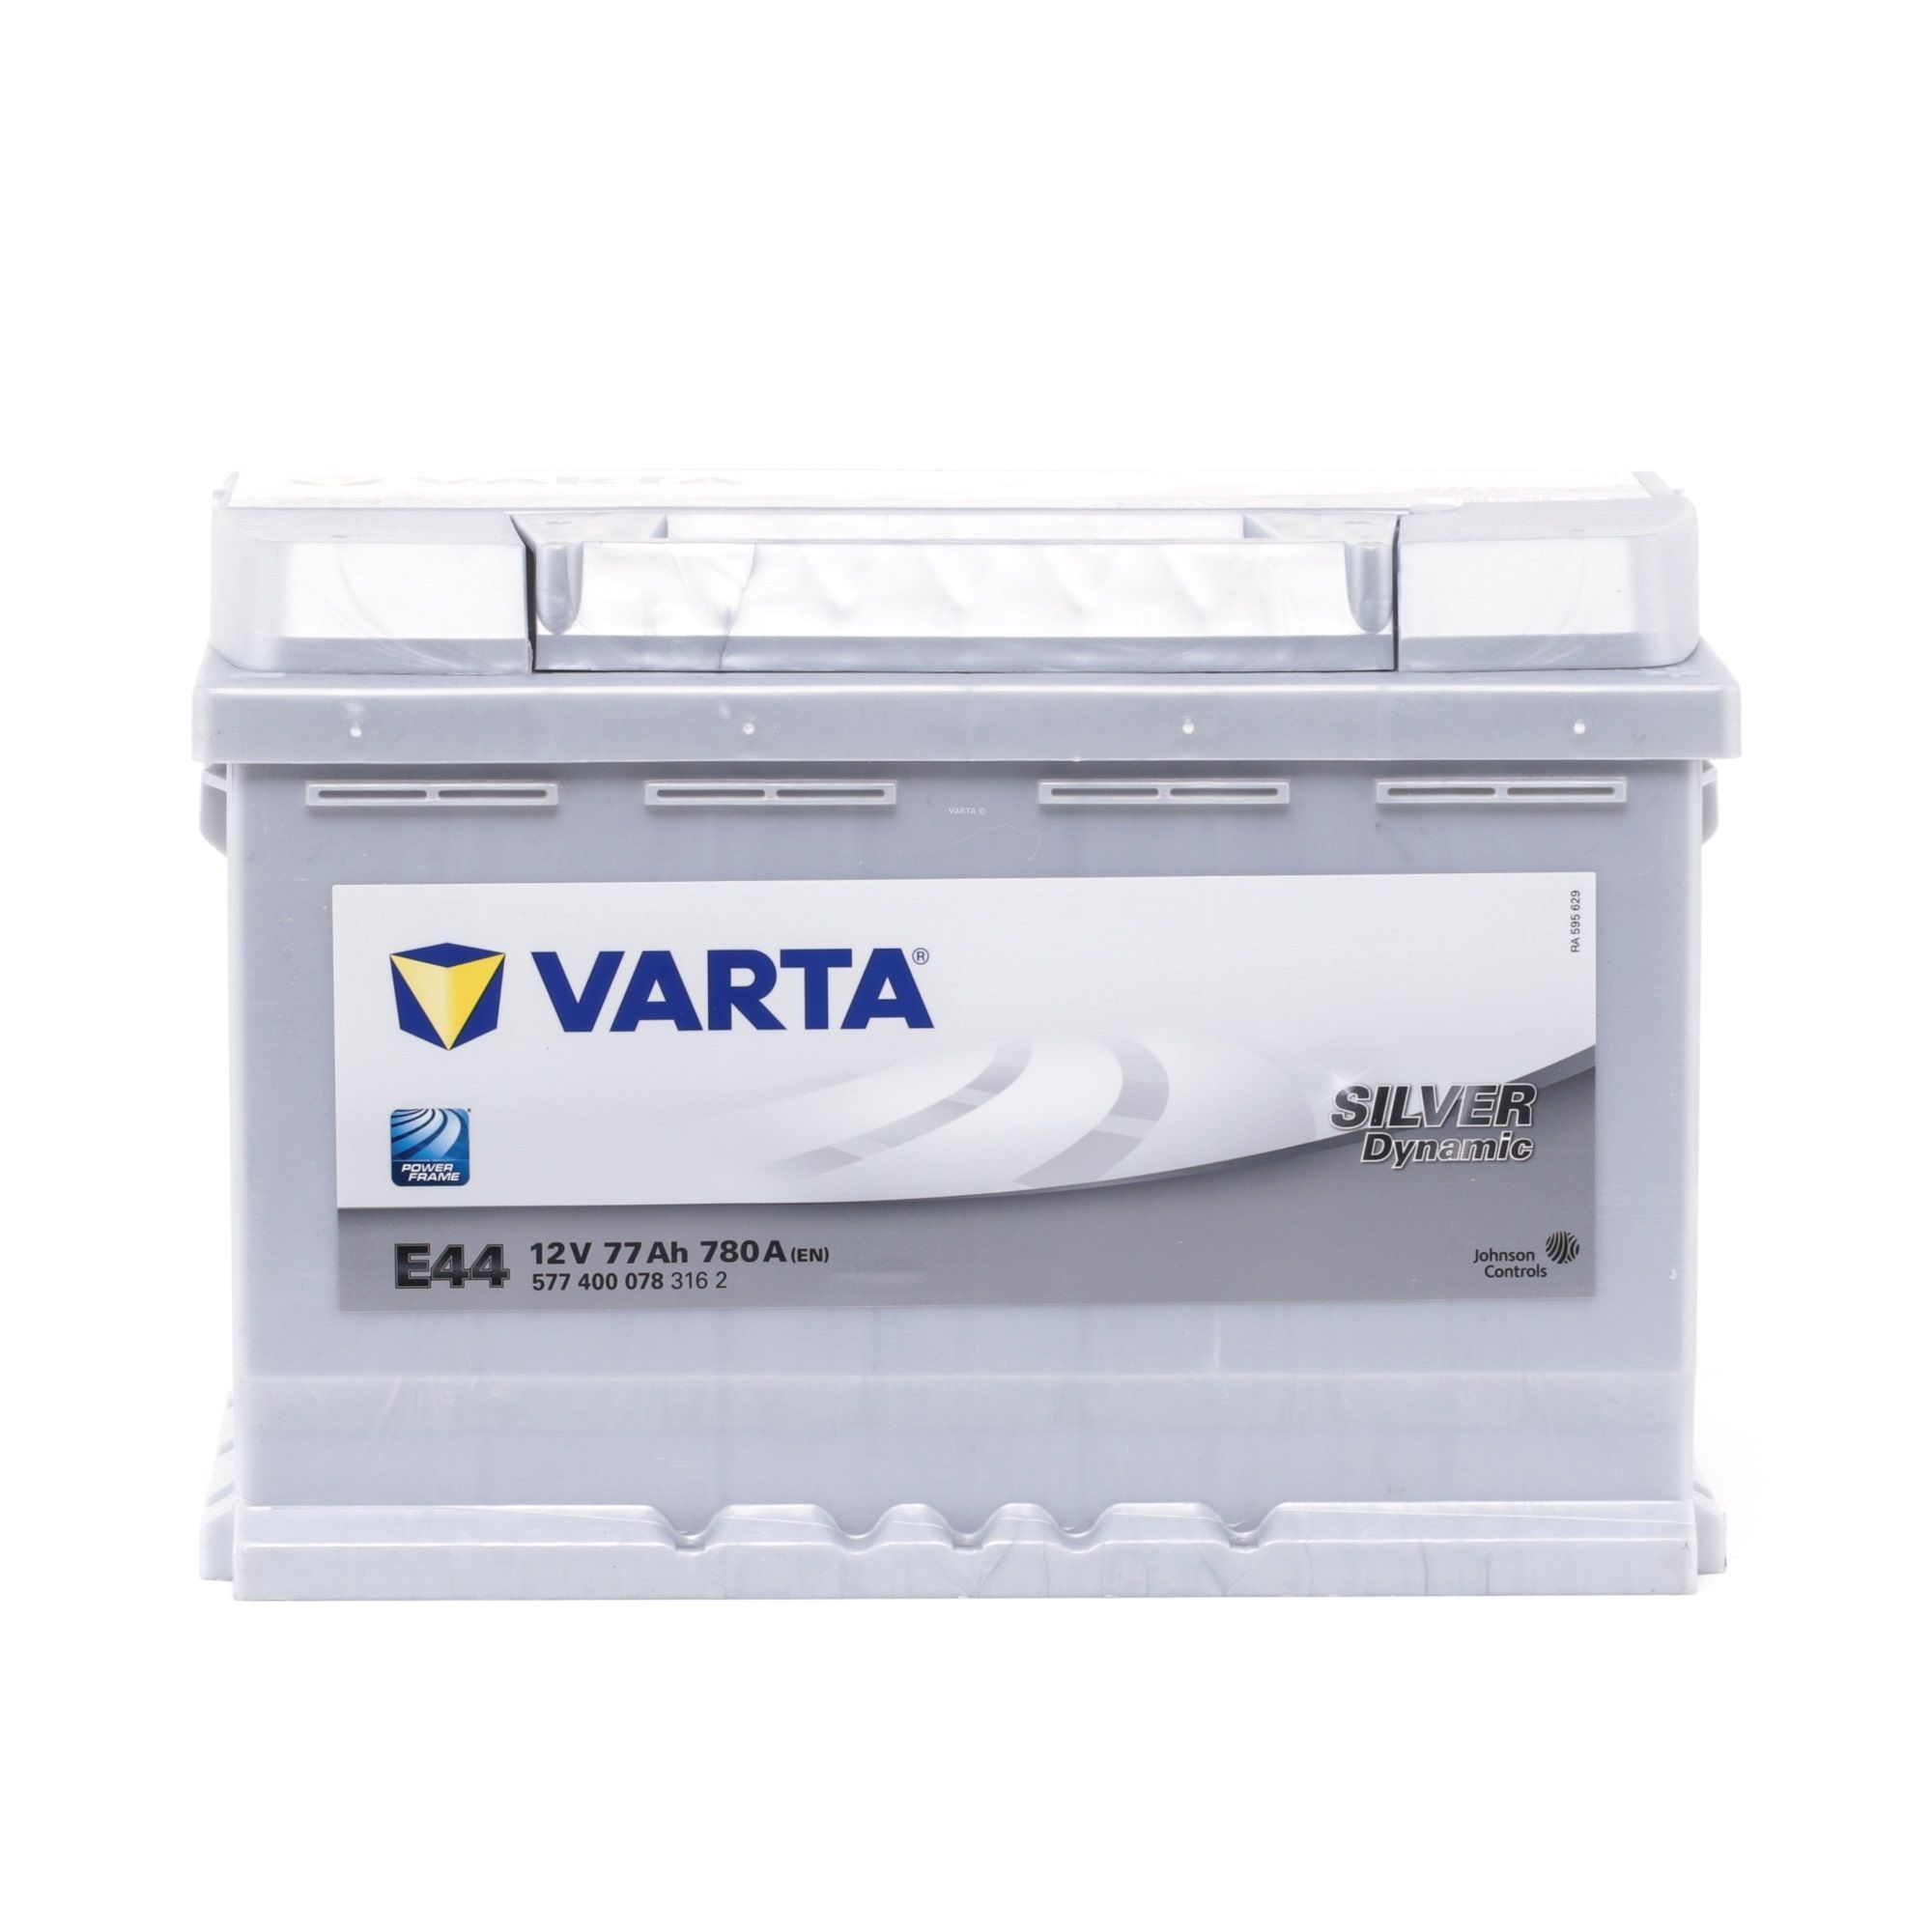 VARTA 5774000783162 Batterie günstig in Online Shop